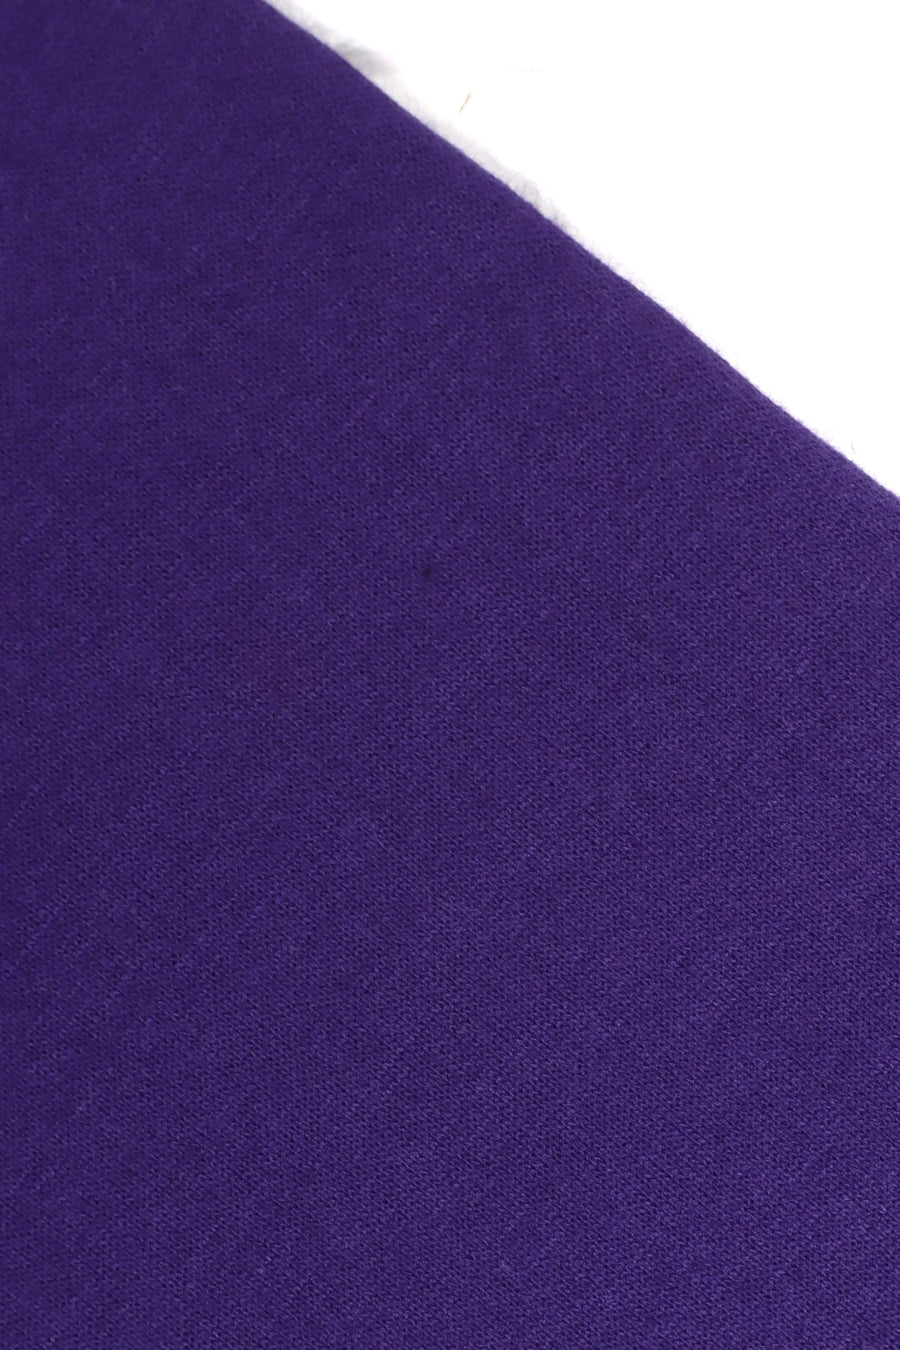 Fish Creek Sailboat Purple Sweatshirt USA Made (L)